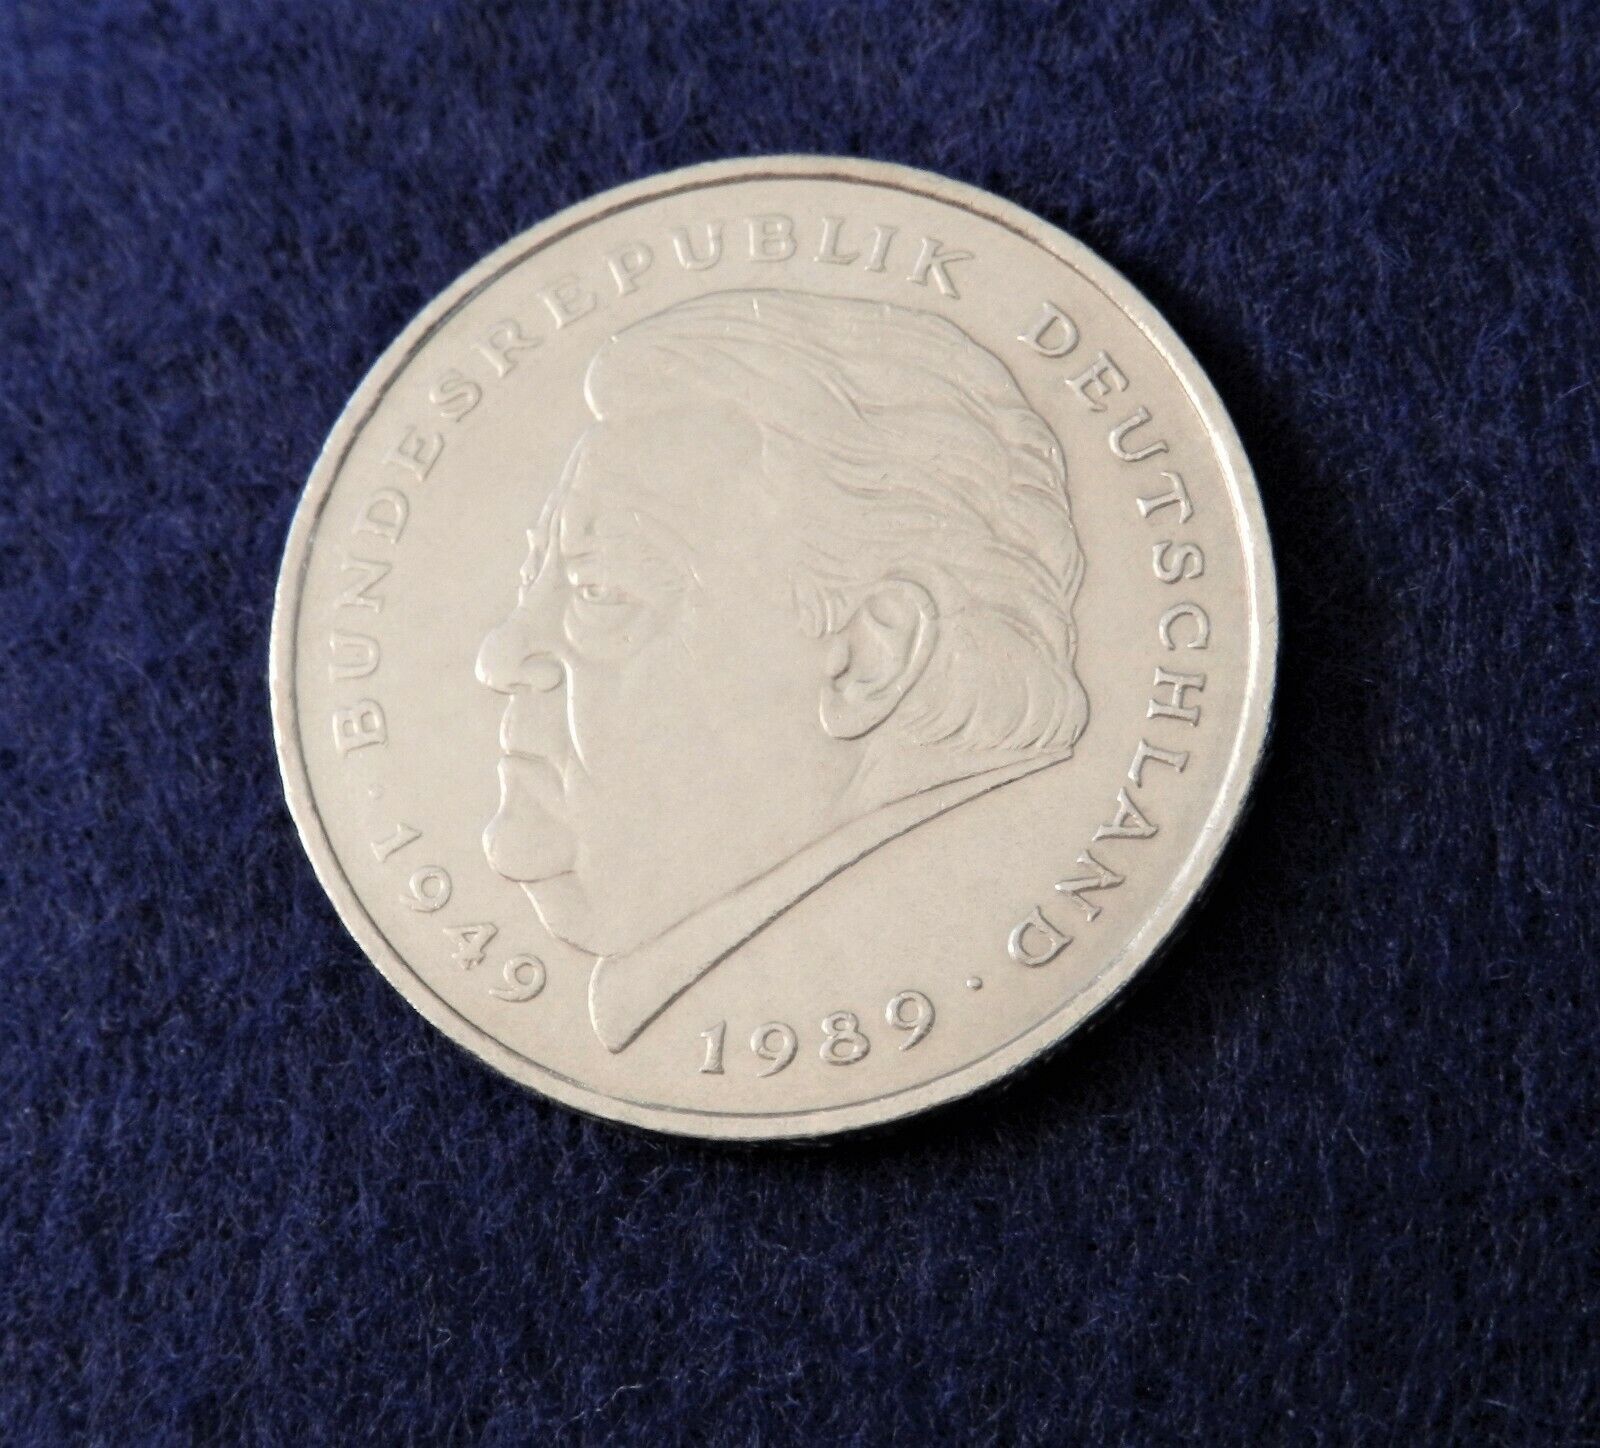 1990 F Germany 2 Mark - Franz Joseph Strauss - Nice Coin - See Pics